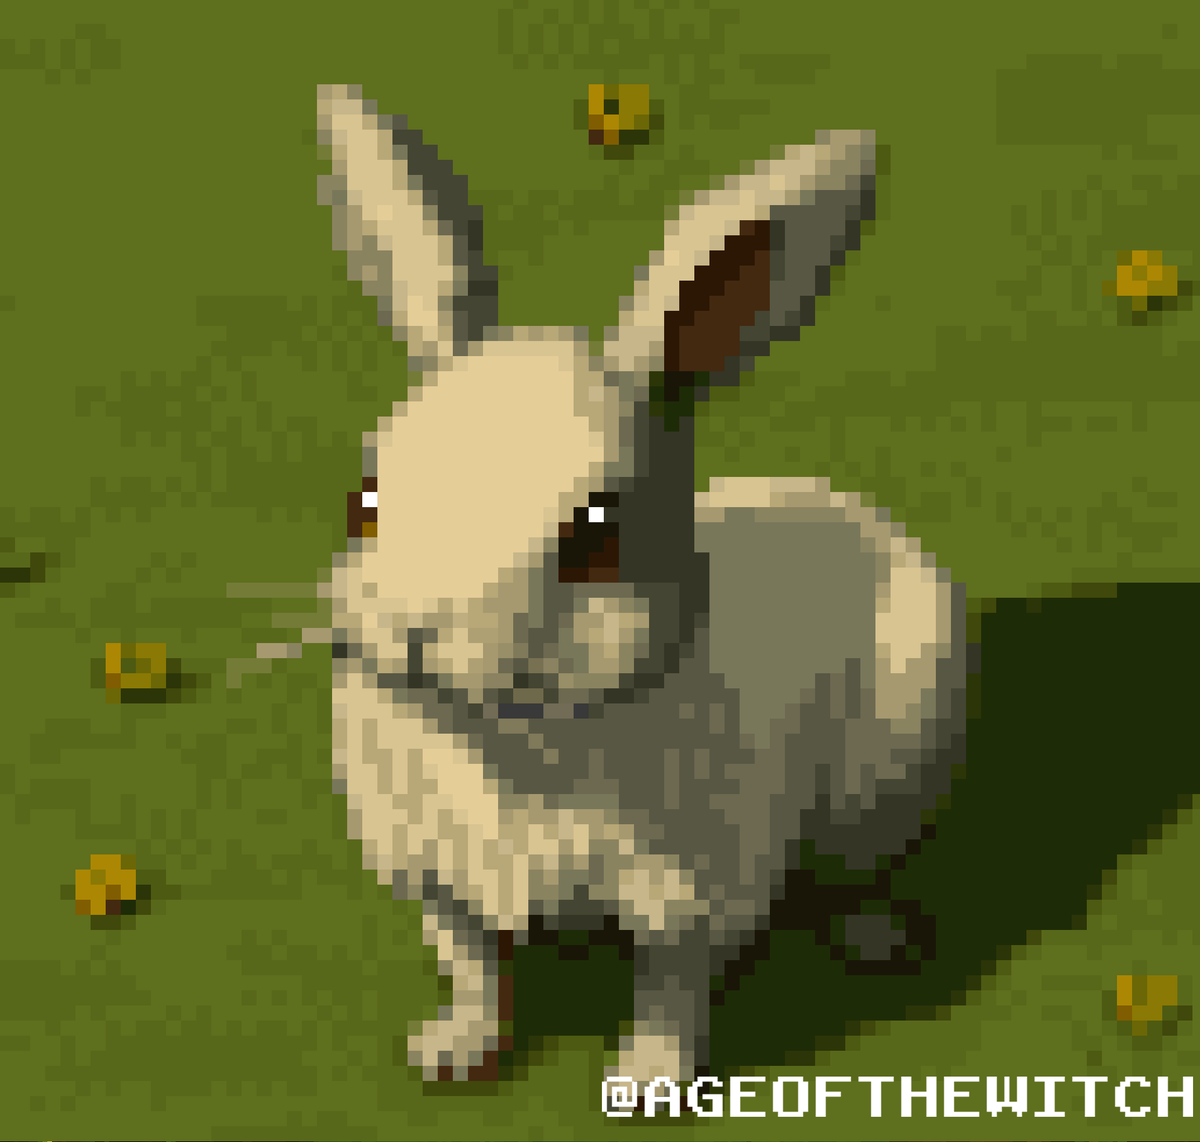 #ScreenshotSaturday rabbit. 🐰

#WIP #pixelart #indiegamedev #gamedev #indiedev #ドット絵 #retrogame #pointandclick #pointandclickadventure #retrogames #retrogaming